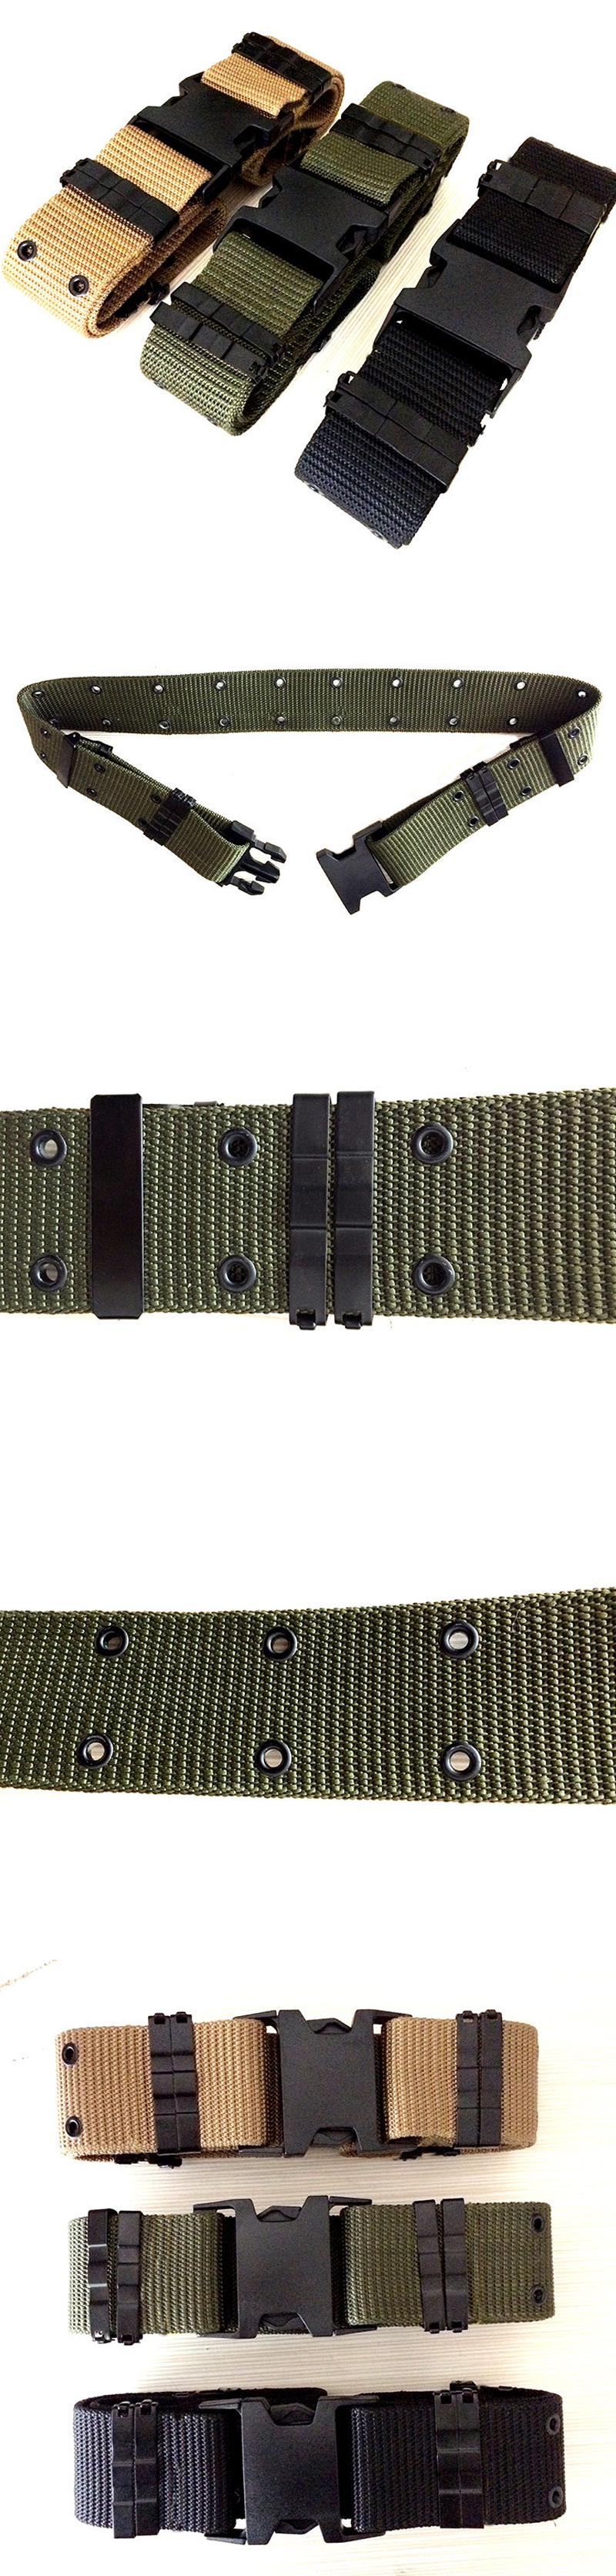 54cm-Diameter-Nylon-Tactical-Belt-Inserting-Quick-Release-Buckle-Waist-Belt-Band-Hunting-Camping-Spo-1437968-1